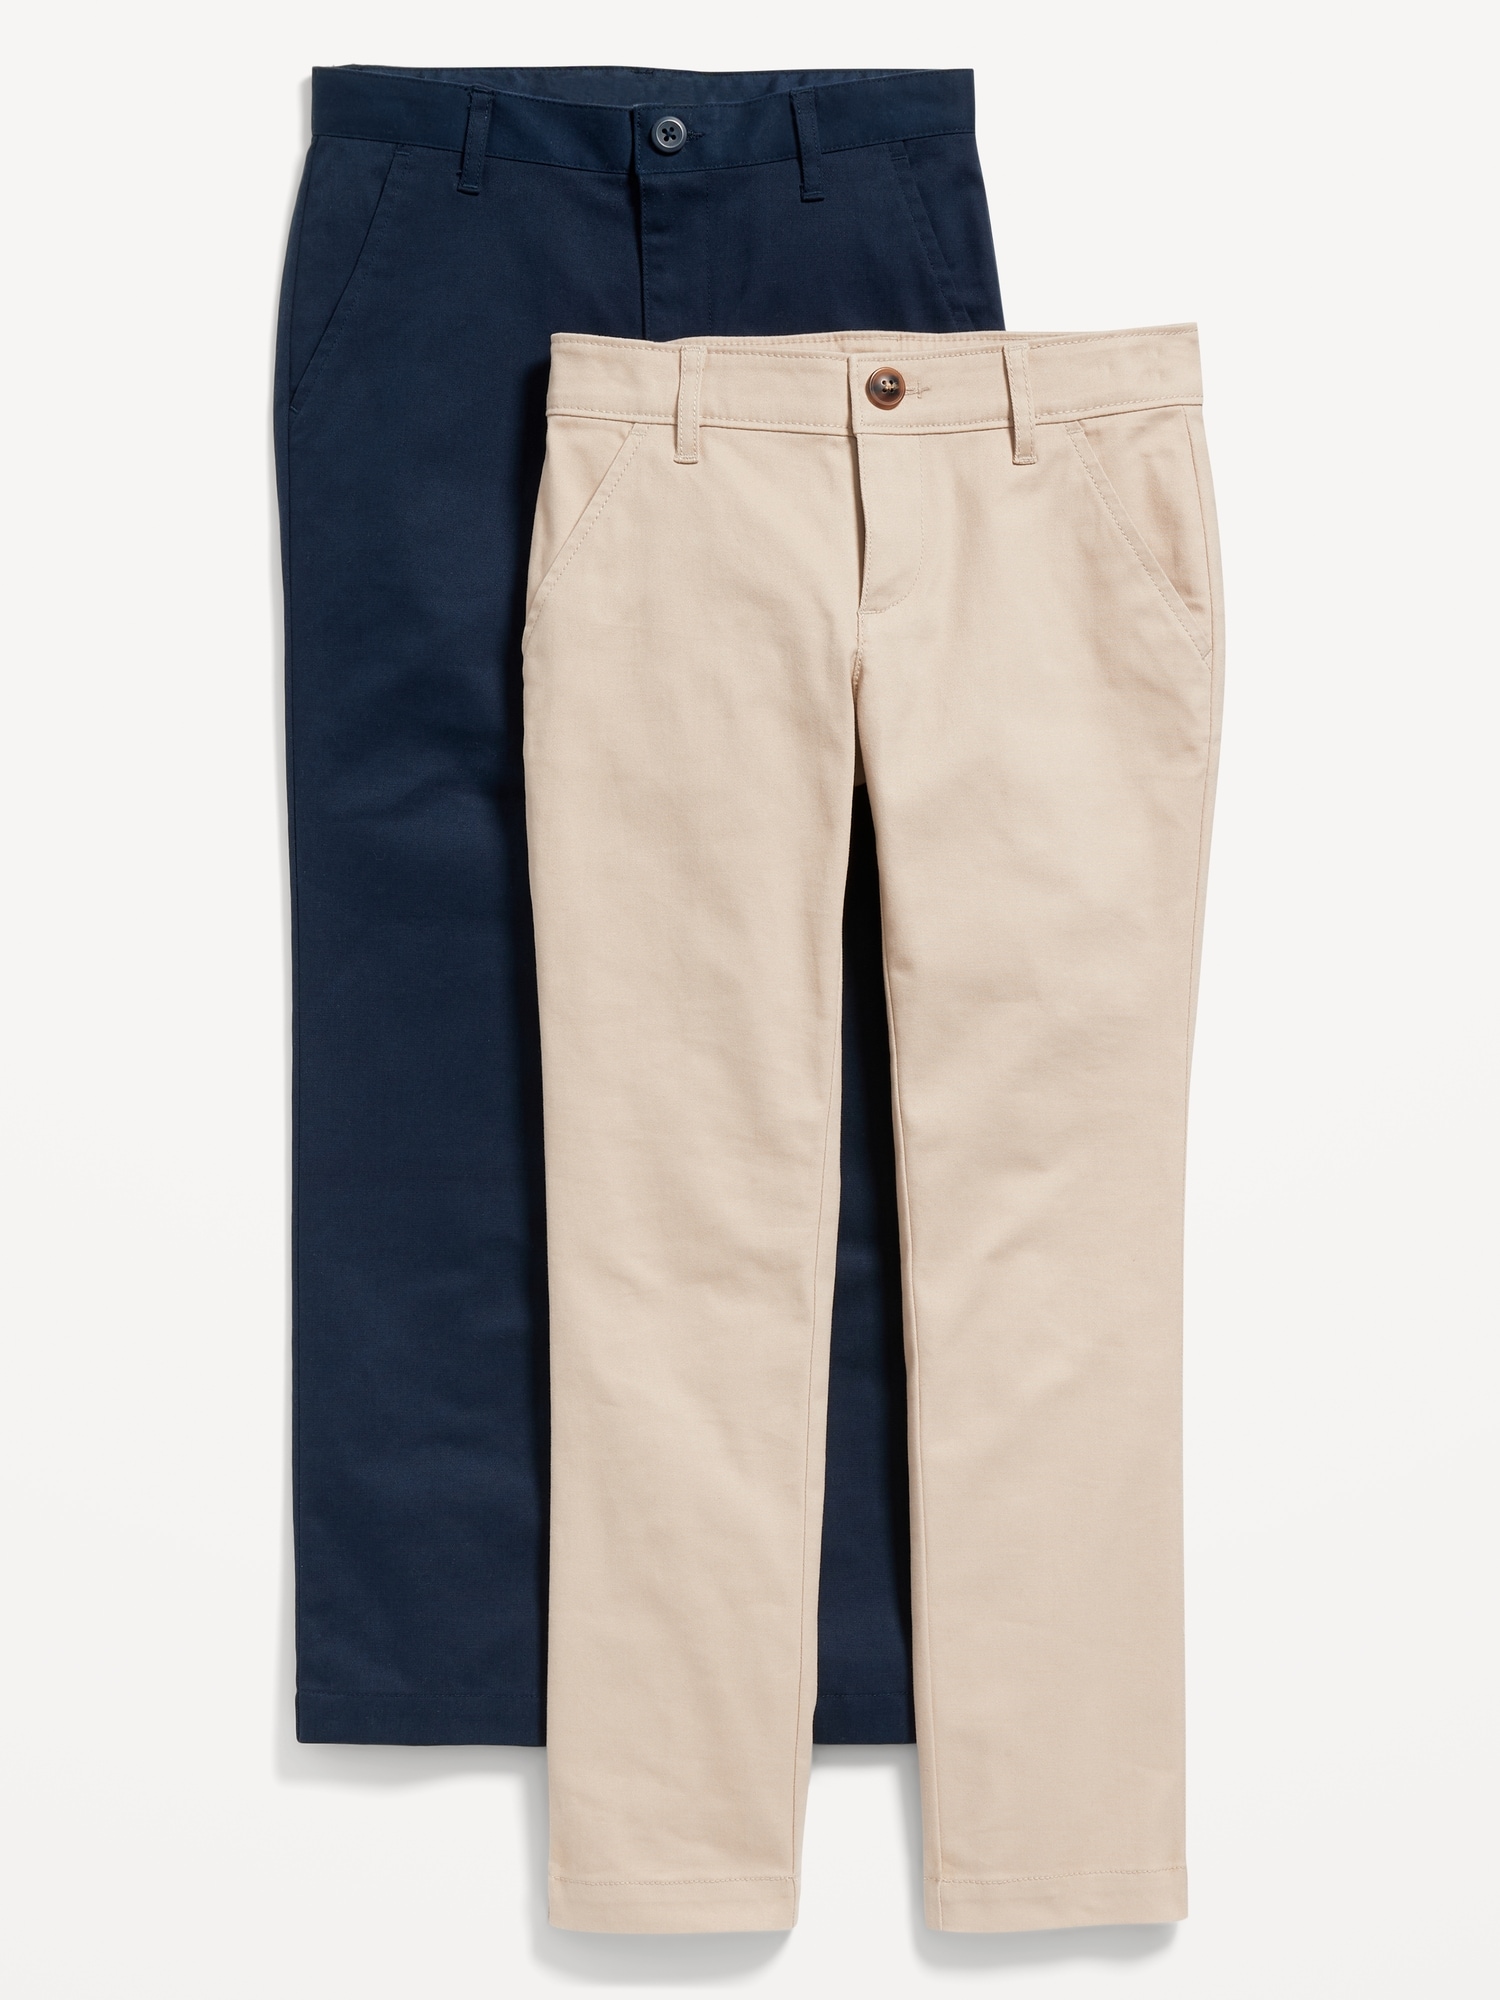 Old Navy Women's Khaki Pants Size 14 Tall — Family Tree Resale 1